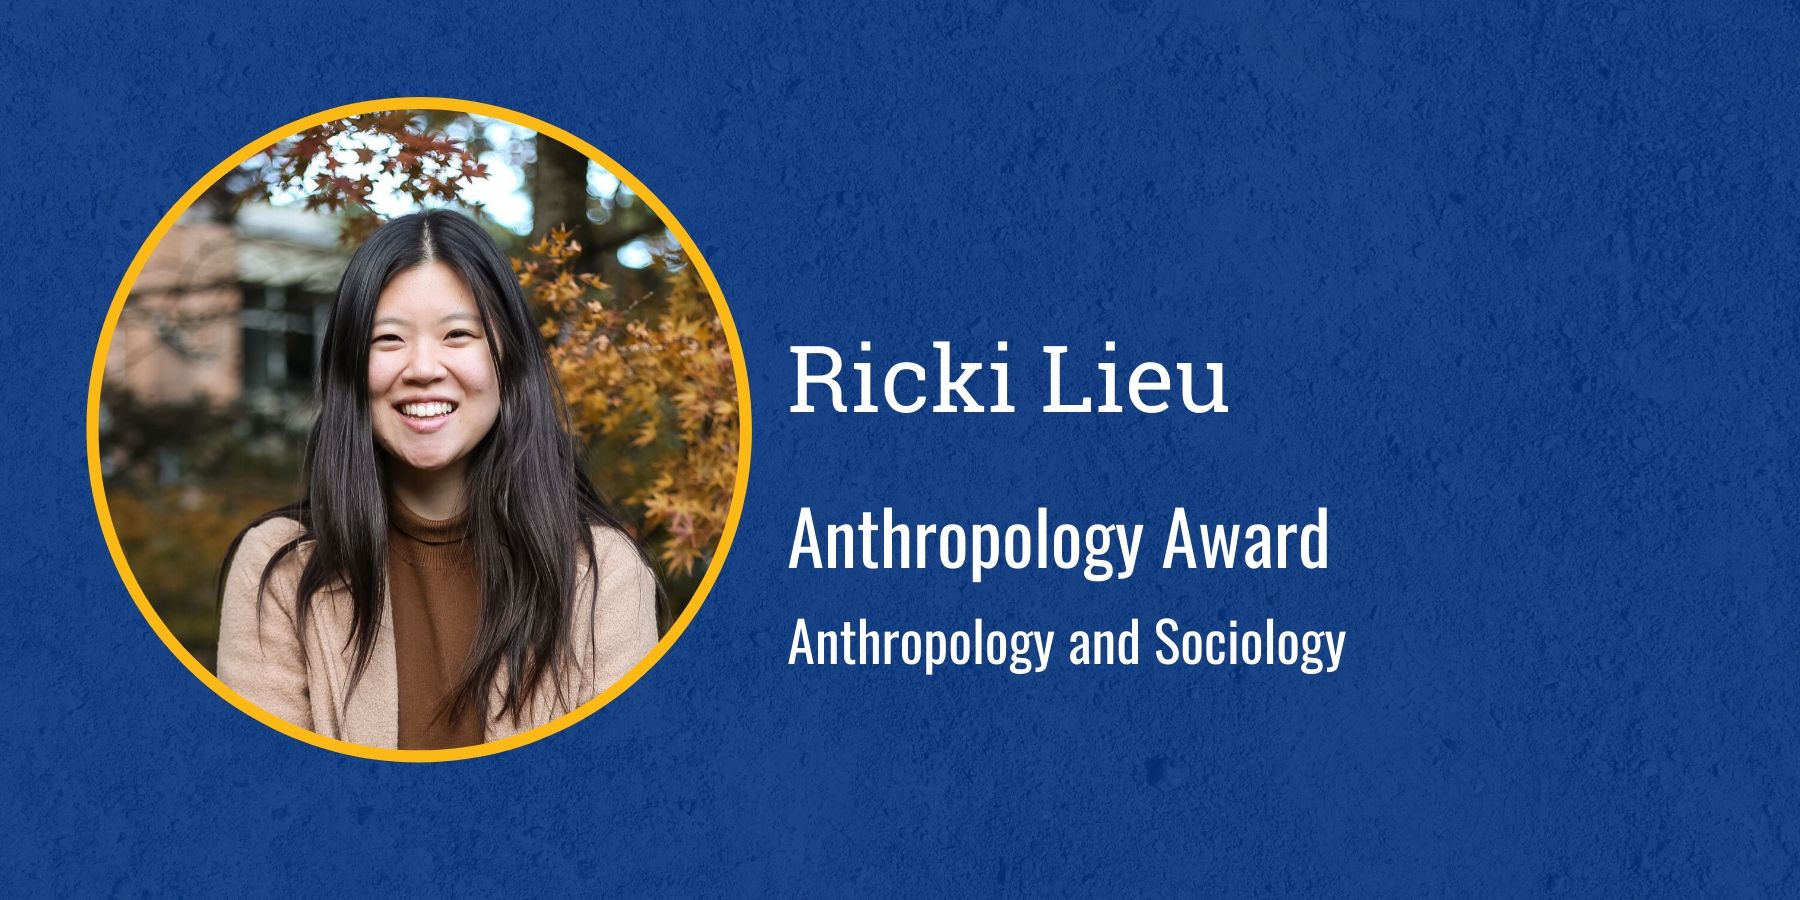 Photo of Ricki Lieu and text Anthropology Award, Anthropology and Sociology